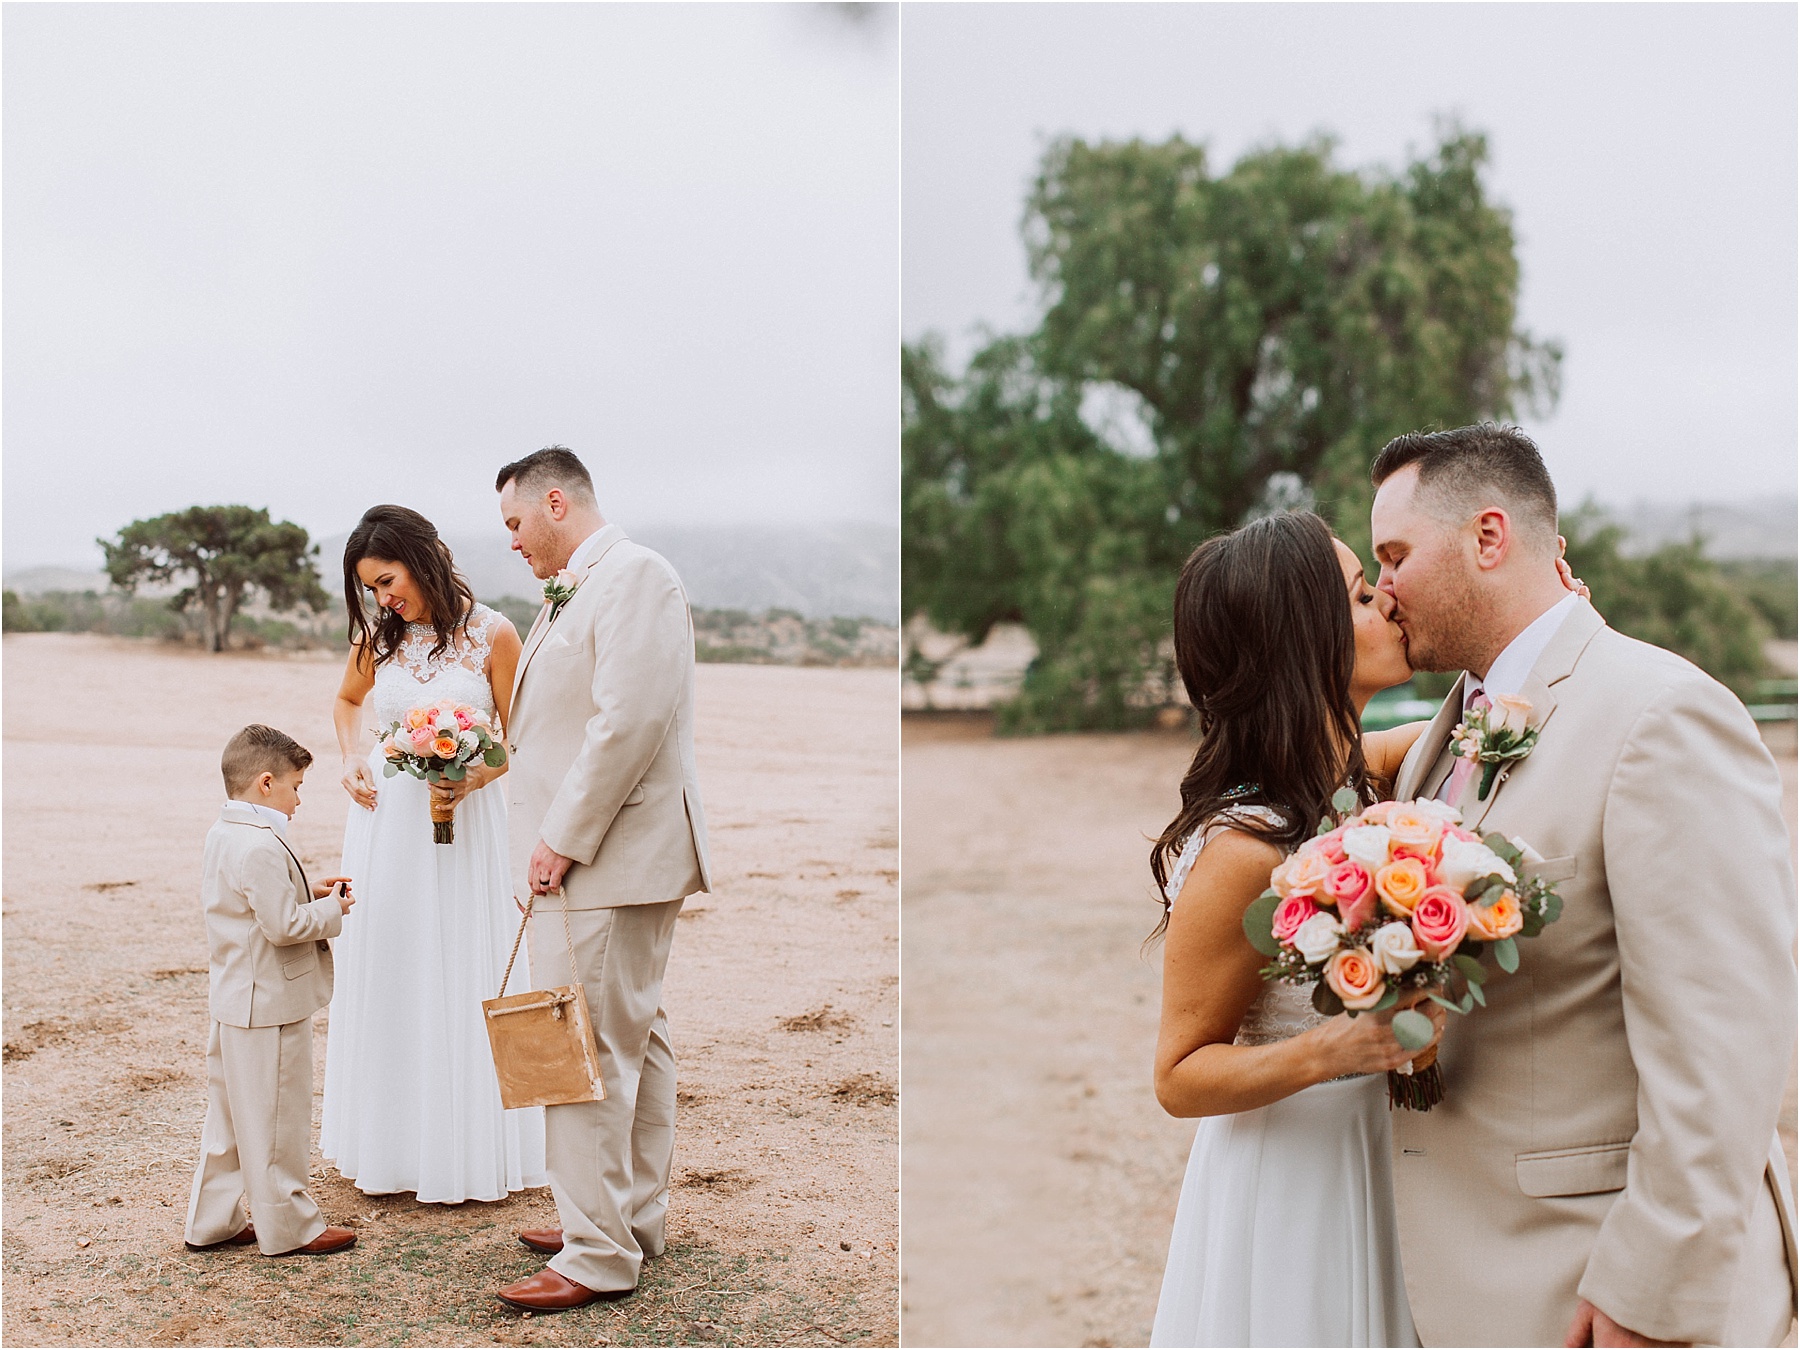 Vasquez Rocks Intimate Wedding & Elopement Photography - Candid